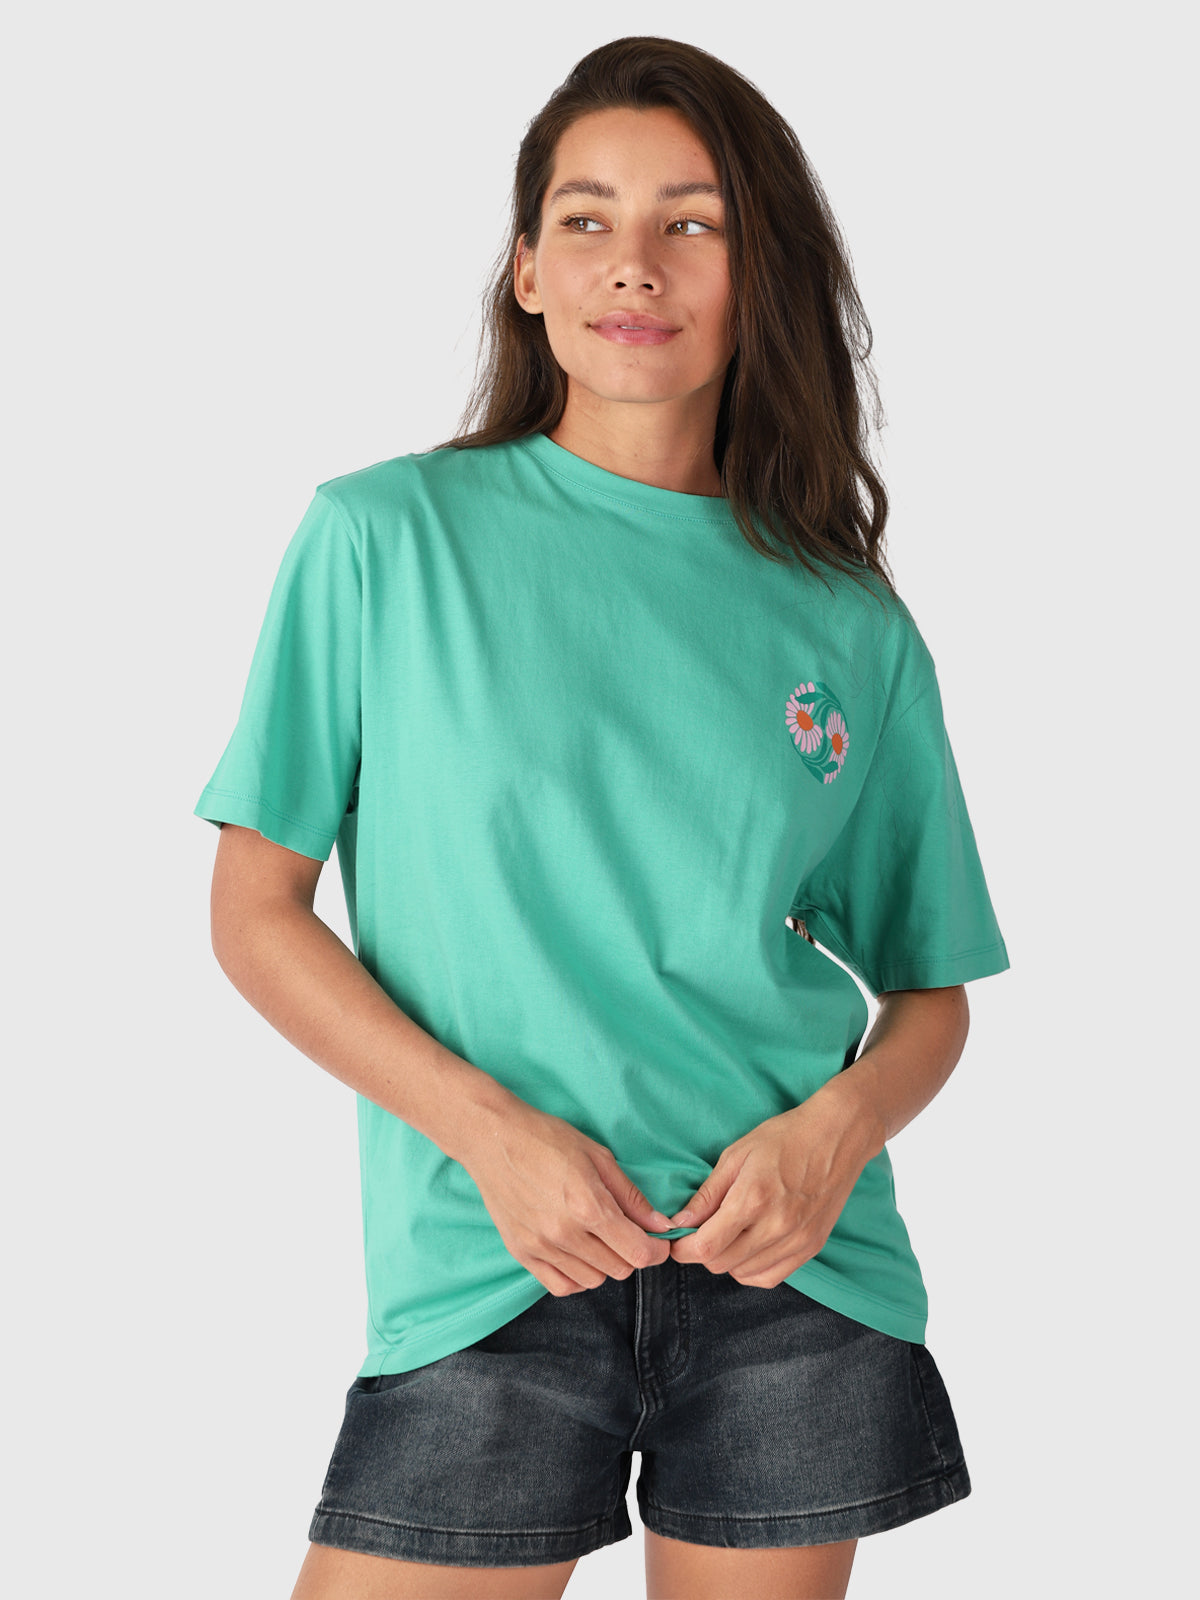 Women - Sale T-Shirts & Tops